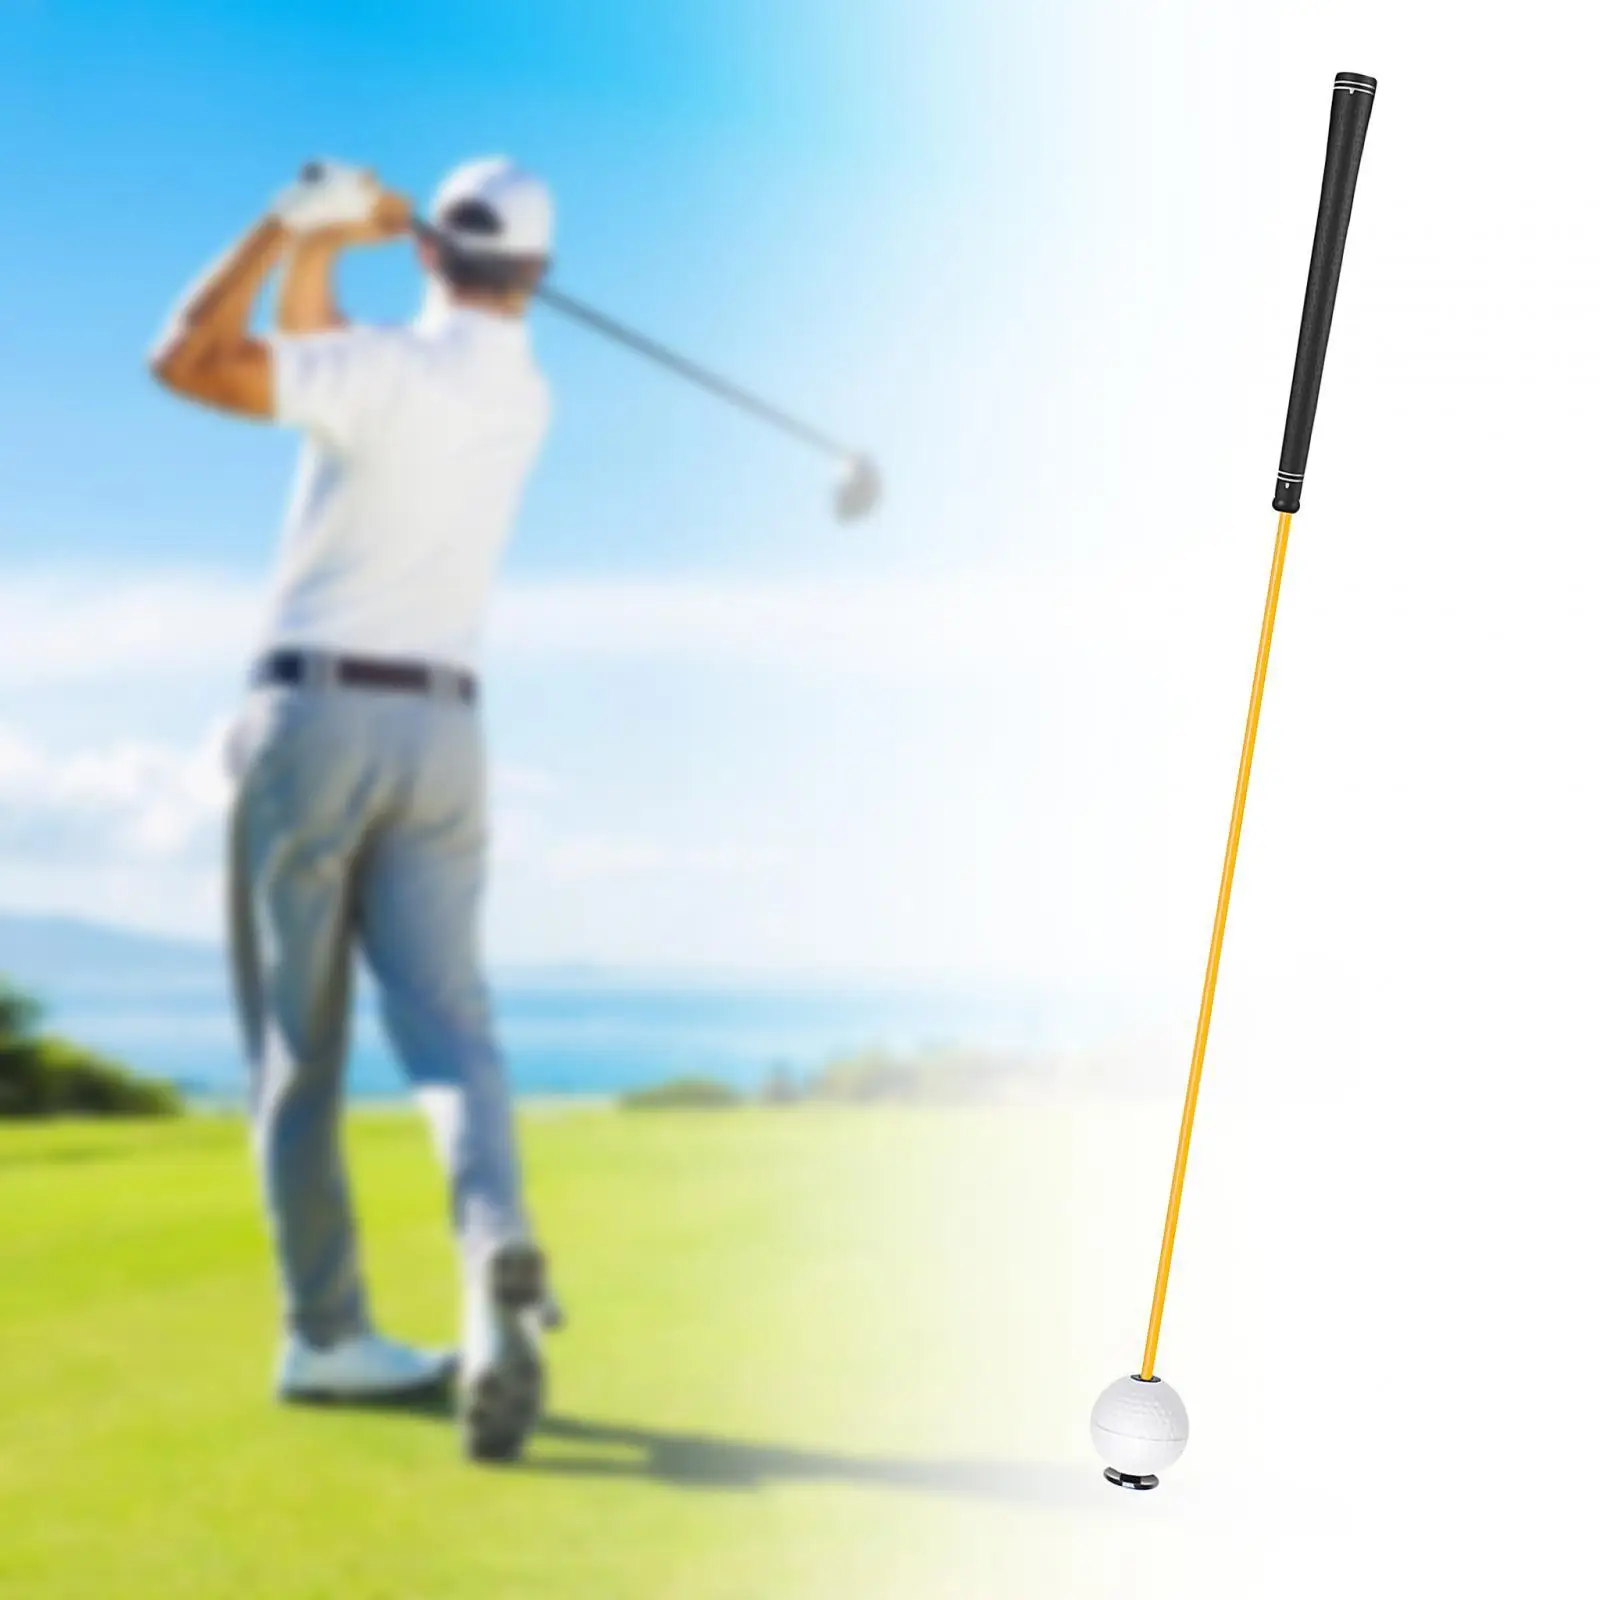 Golf Swing Trainer Golfing Equipment Golf Swing Training Aid for Position Correction Rhythm Flexibility Balance Accessories